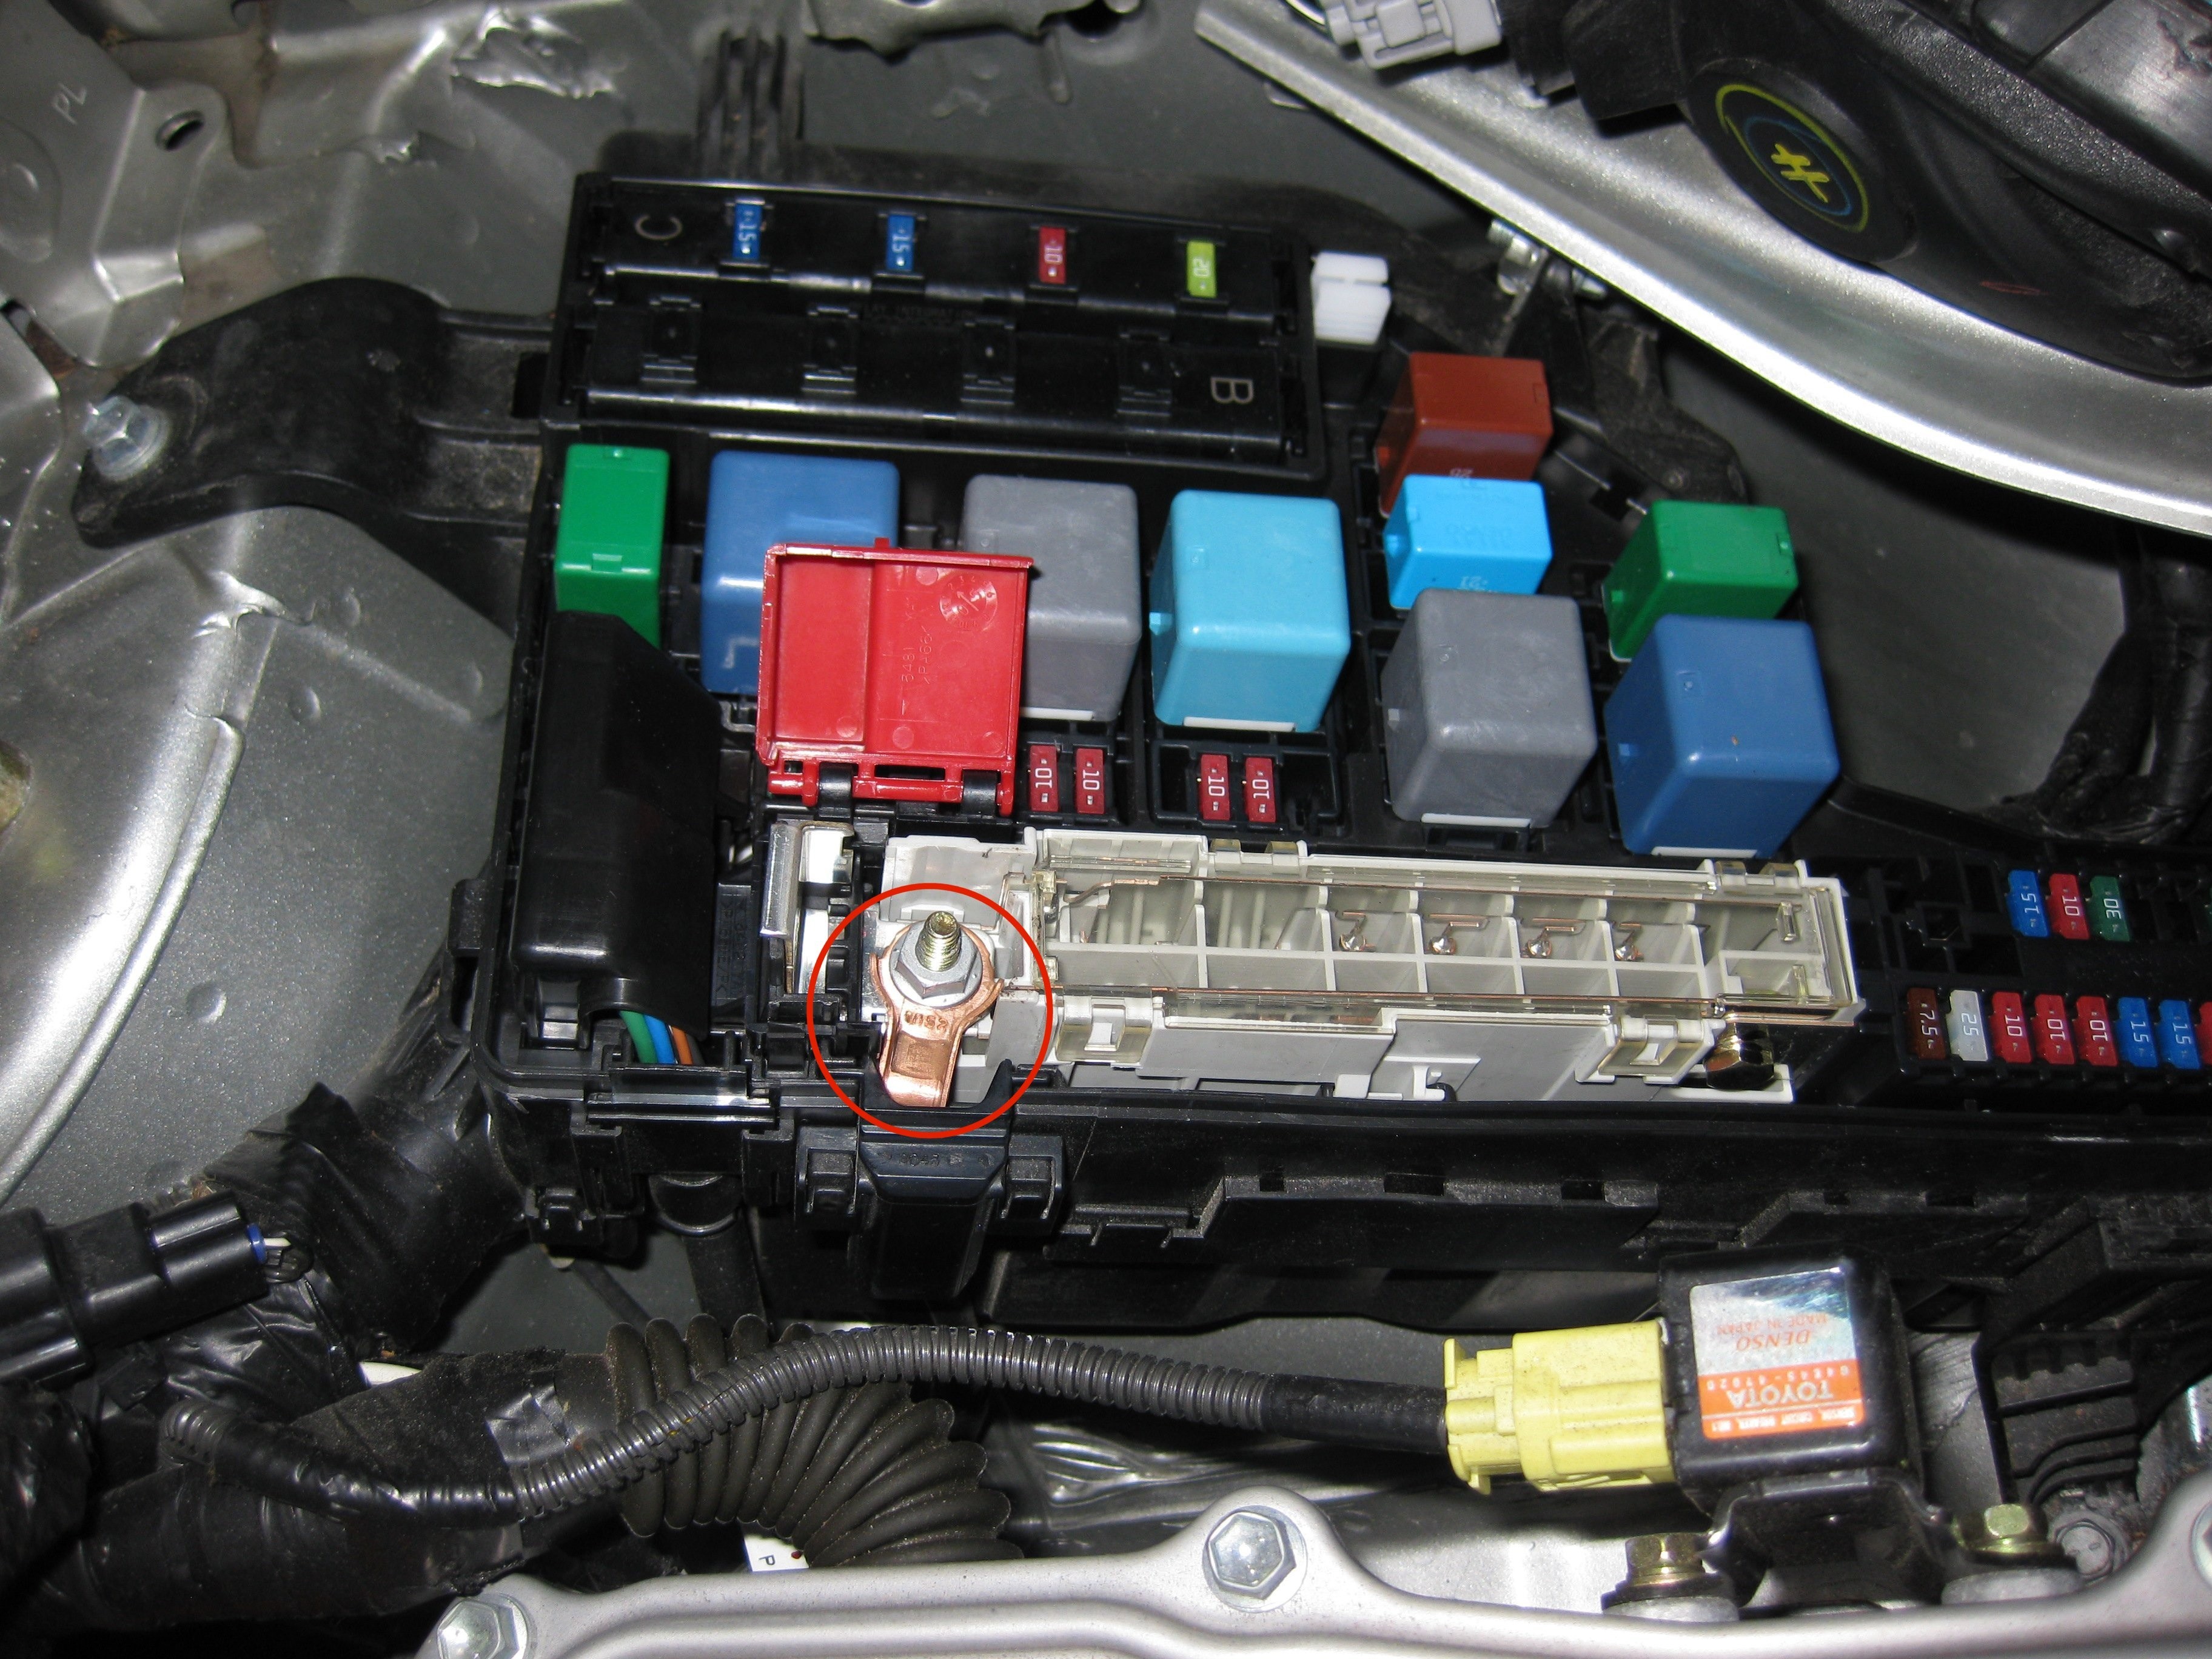 Prius Engine Diagram 2005 Prius Will Not Start after Replacing 12 Volt Battery Of Prius Engine Diagram